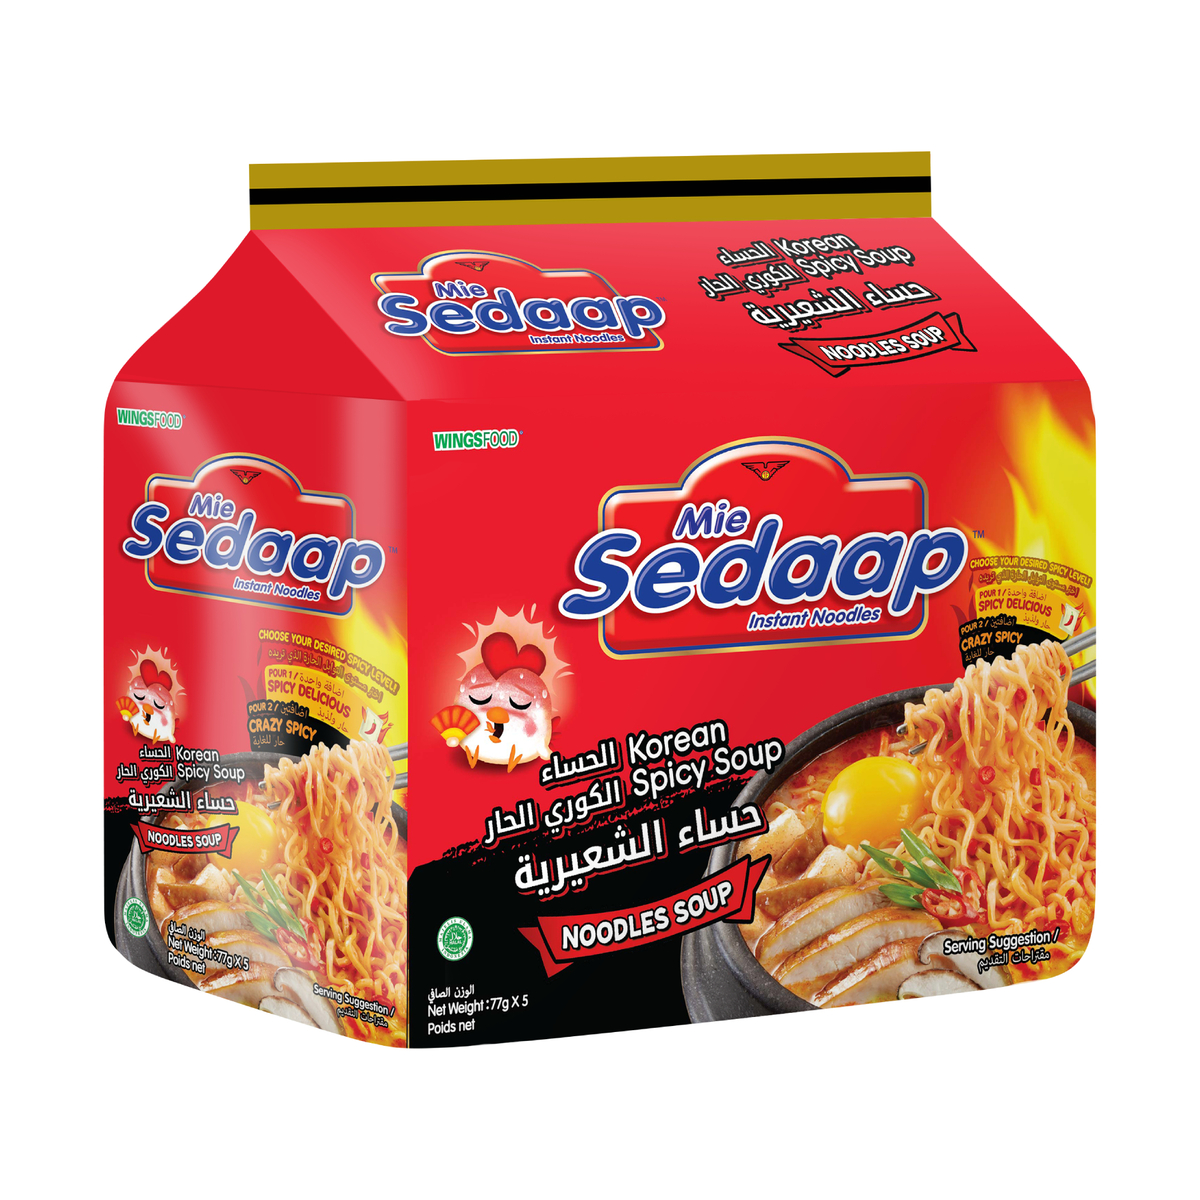 Mie Sedaap Korean Spicy Instant Soup 77 g